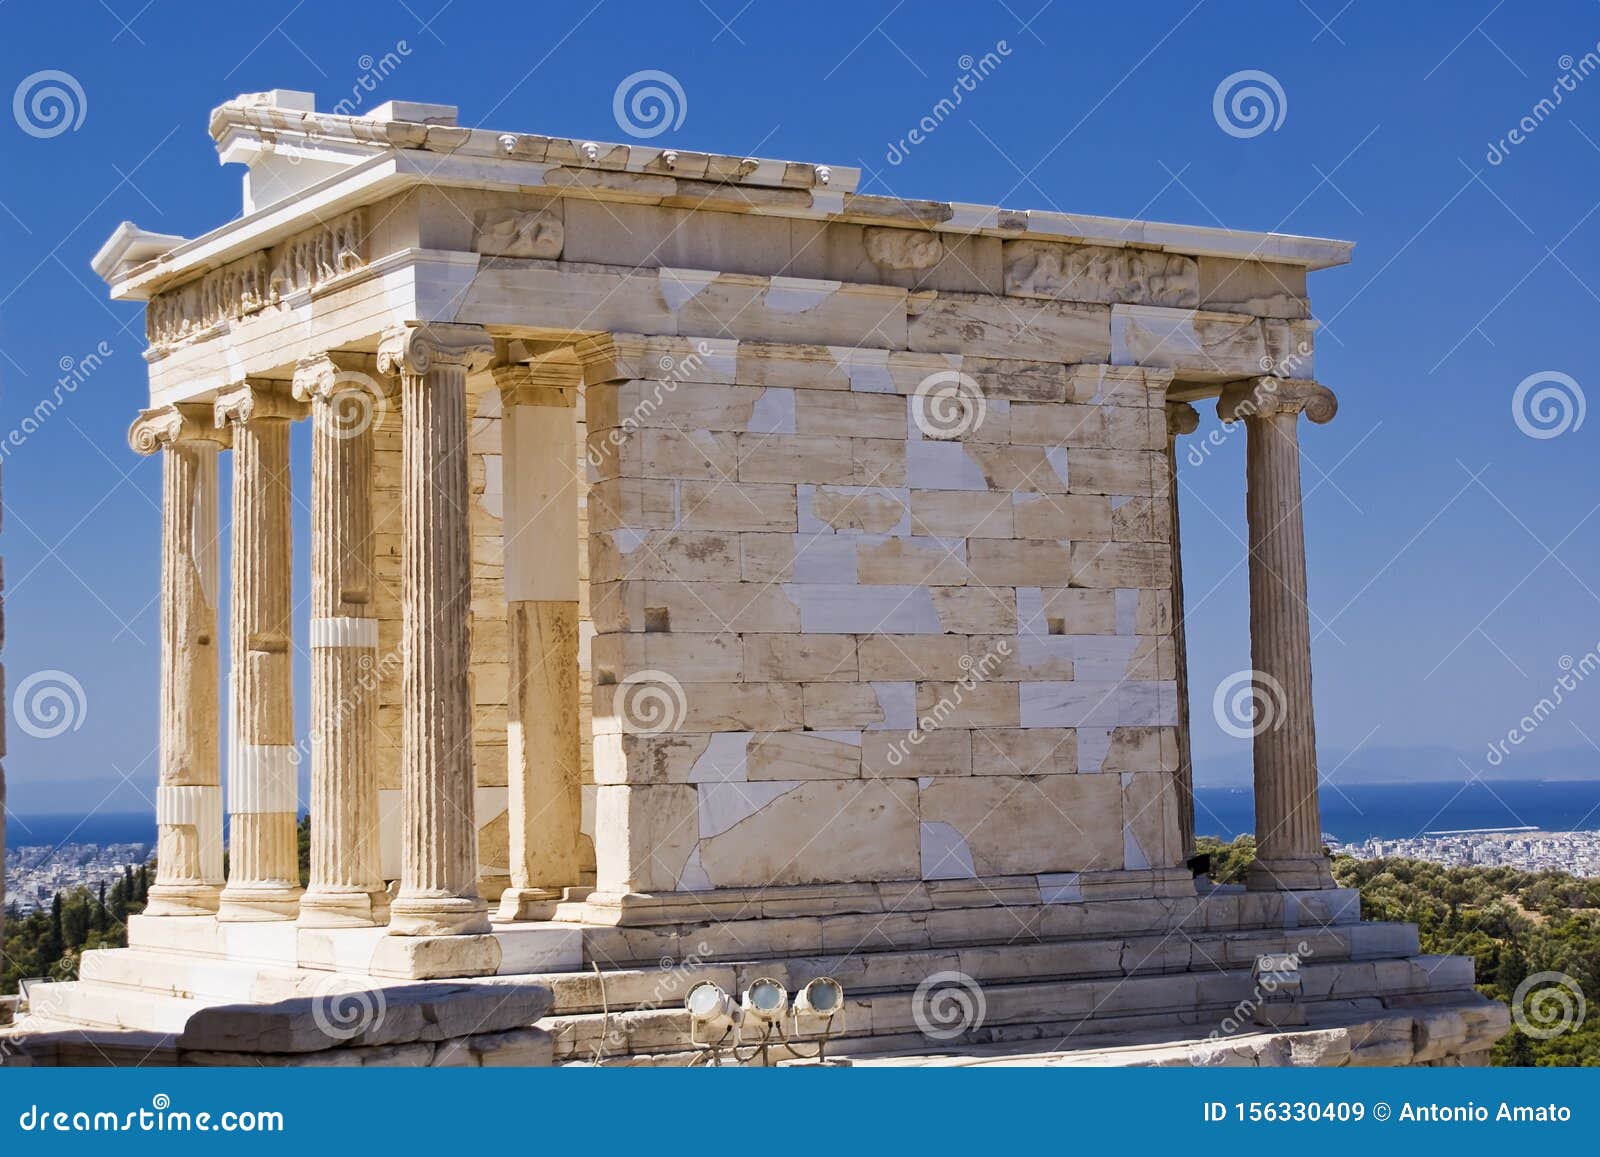 the temple of athena nike